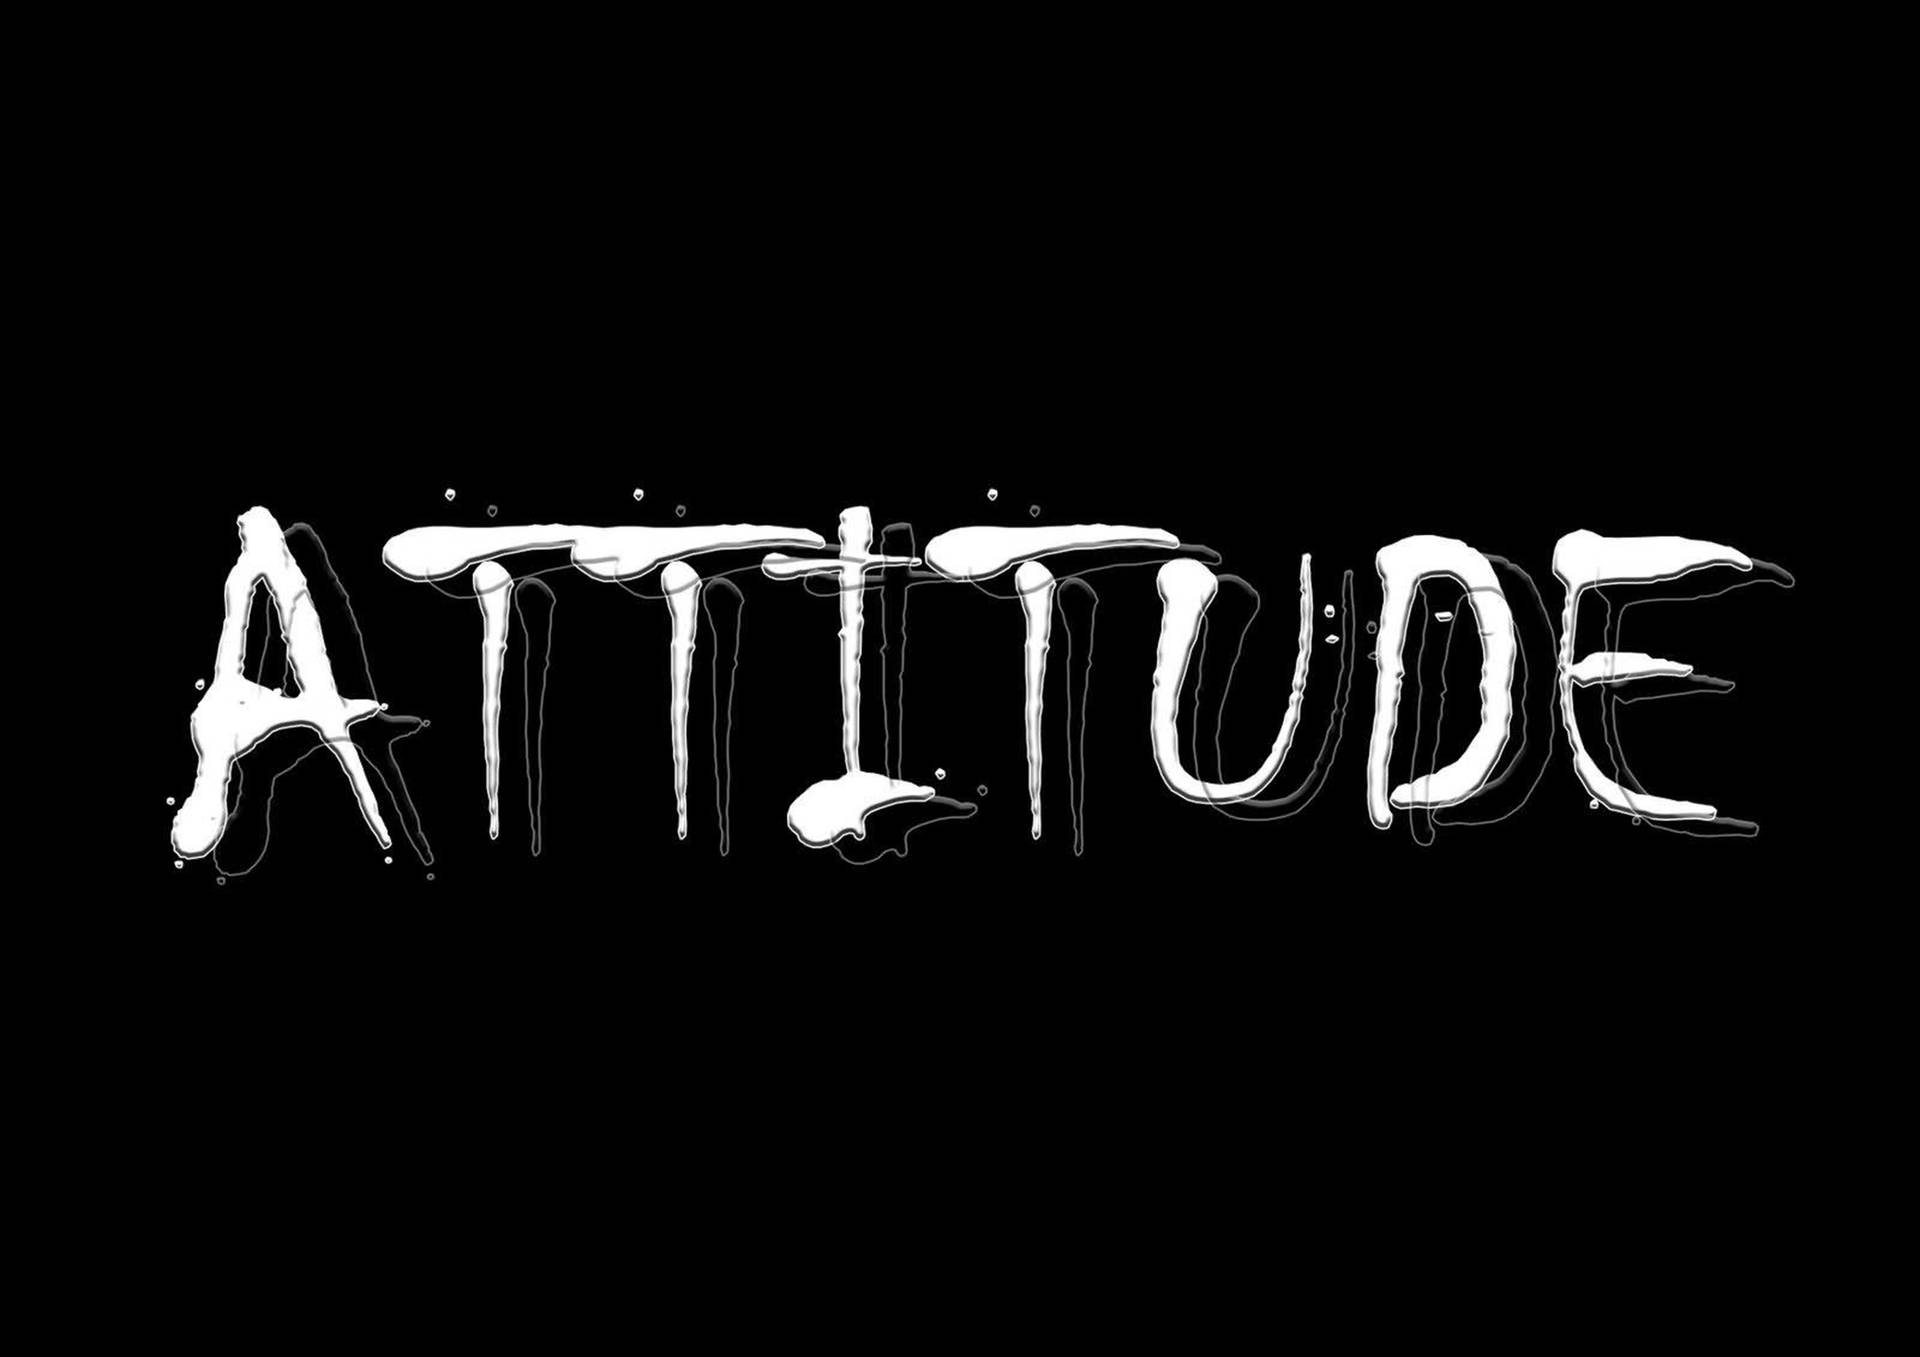 Free Attitude 4k Wallpaper Downloads, [100+] Attitude 4k Wallpapers for  FREE 